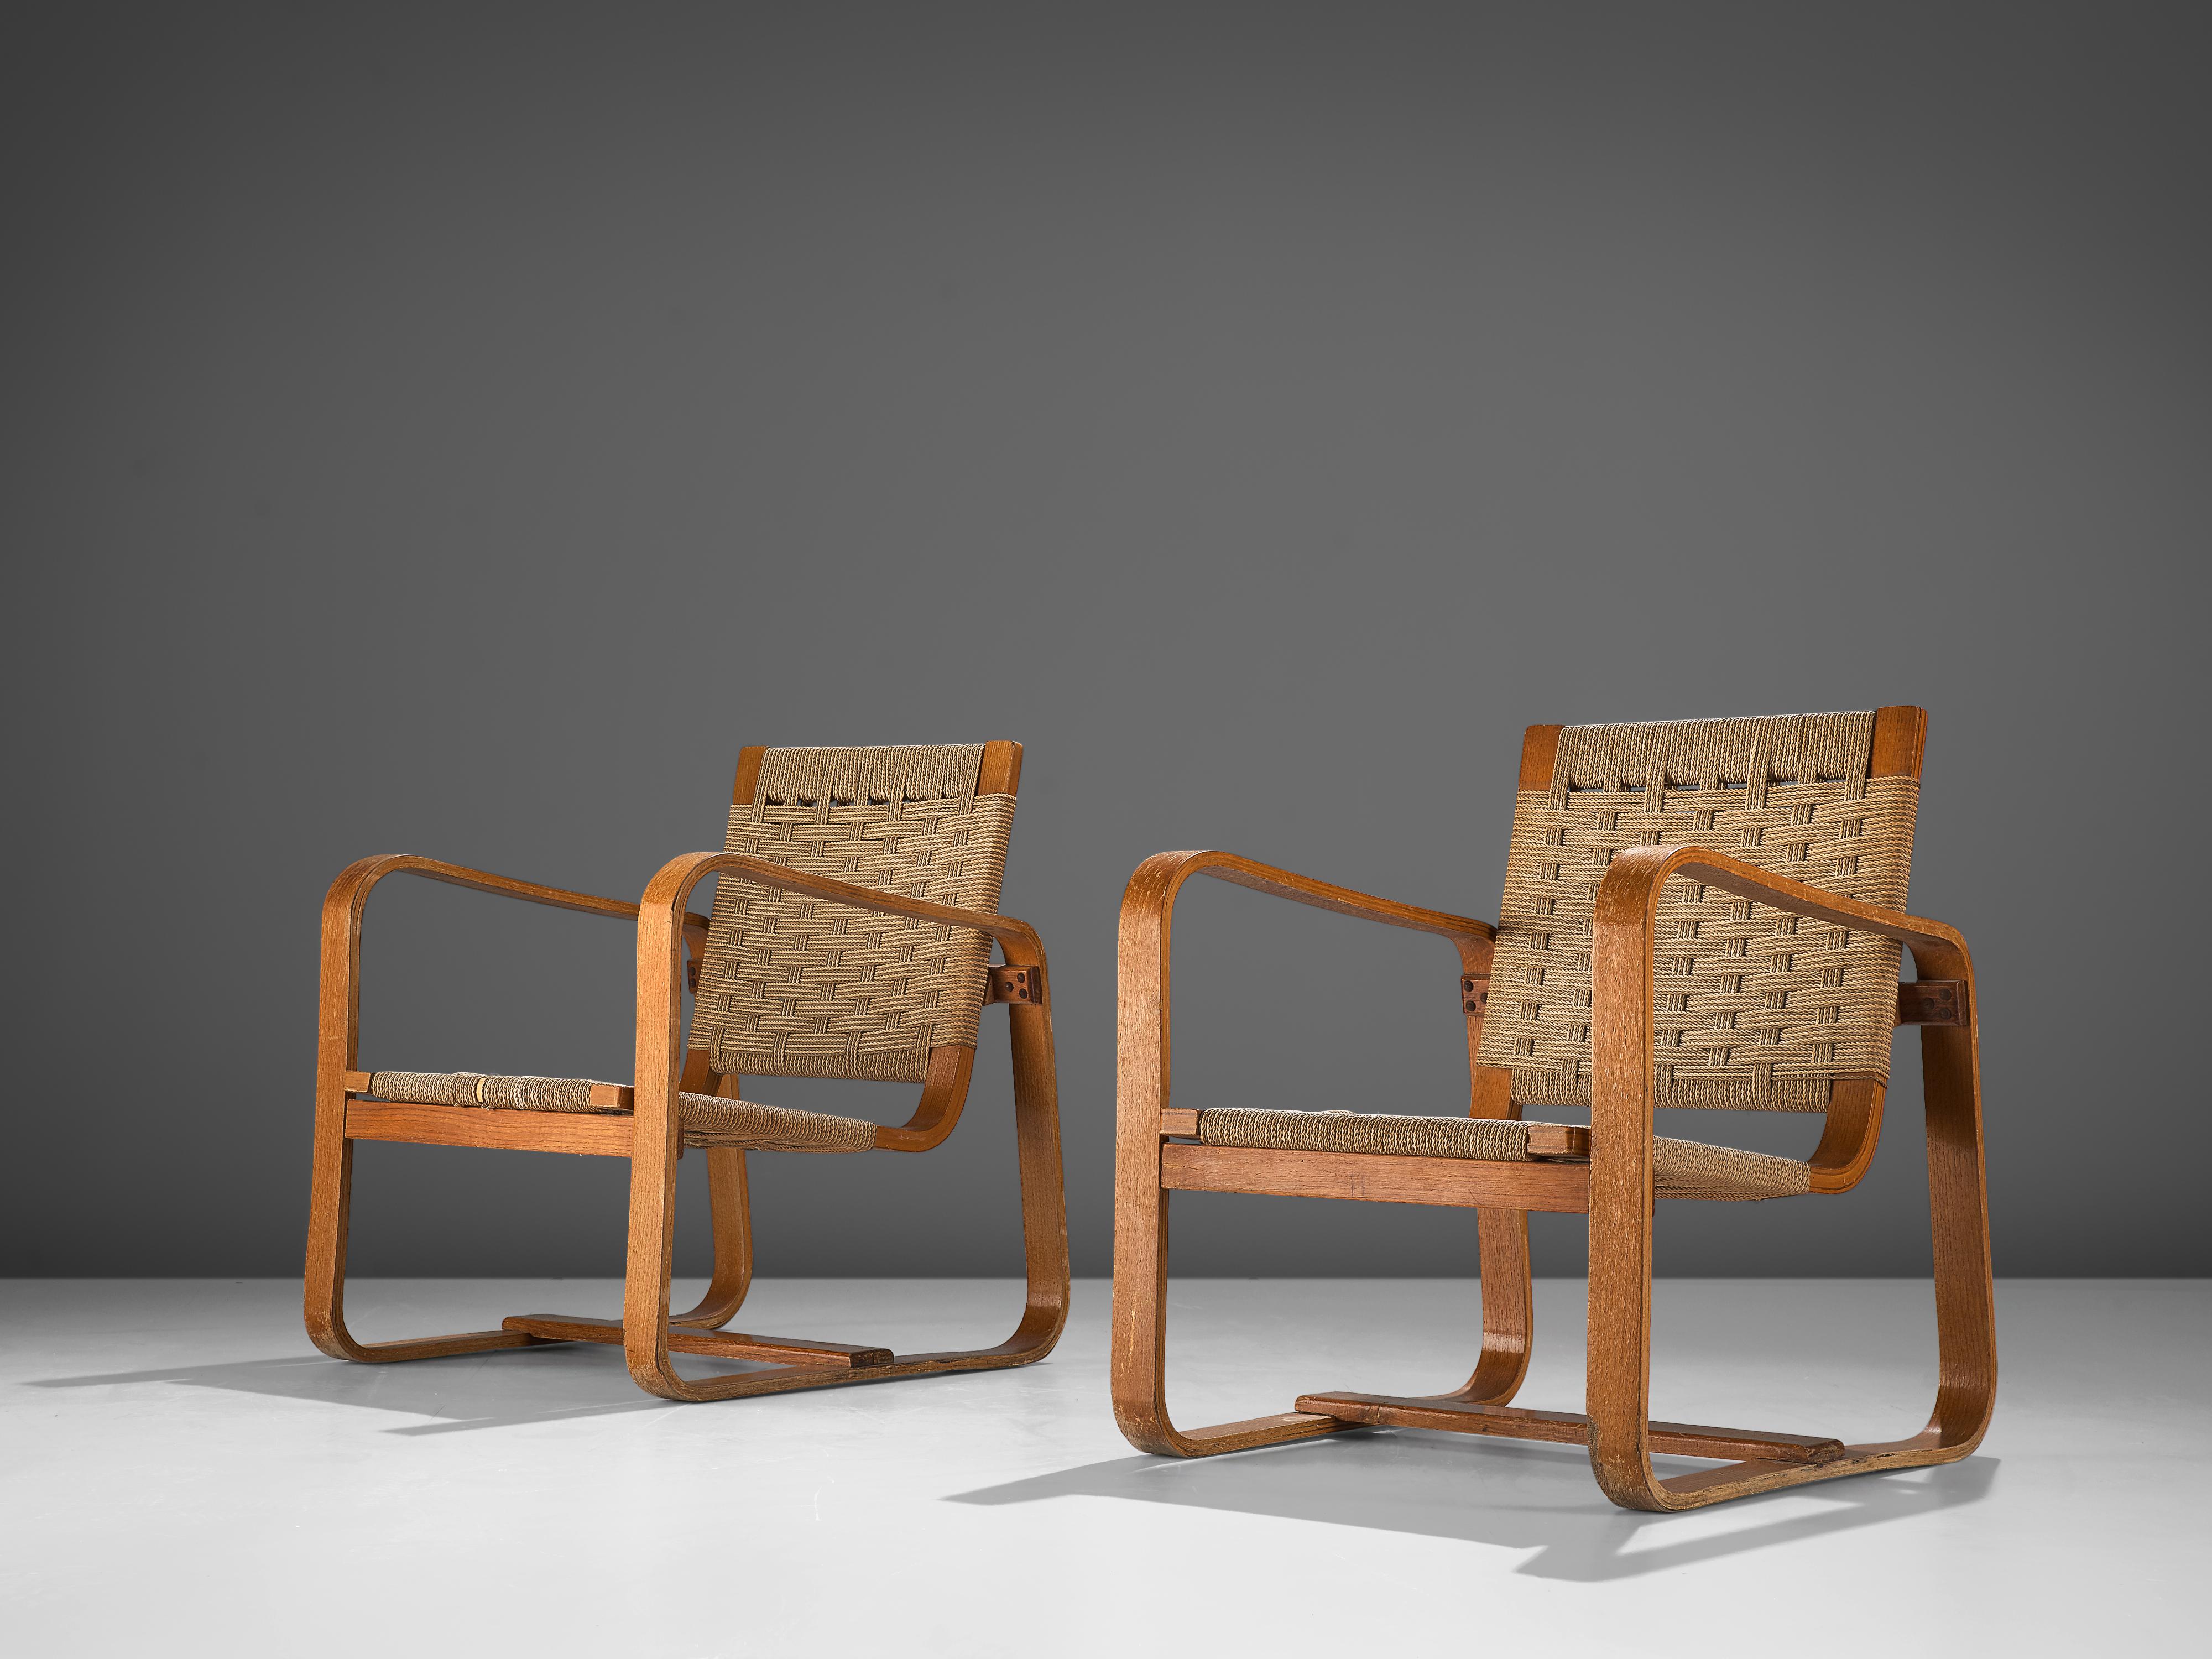 Italian Giuseppe Pagano Pogatschnig Pair of Bentwood Lounge Chairs, 1940s